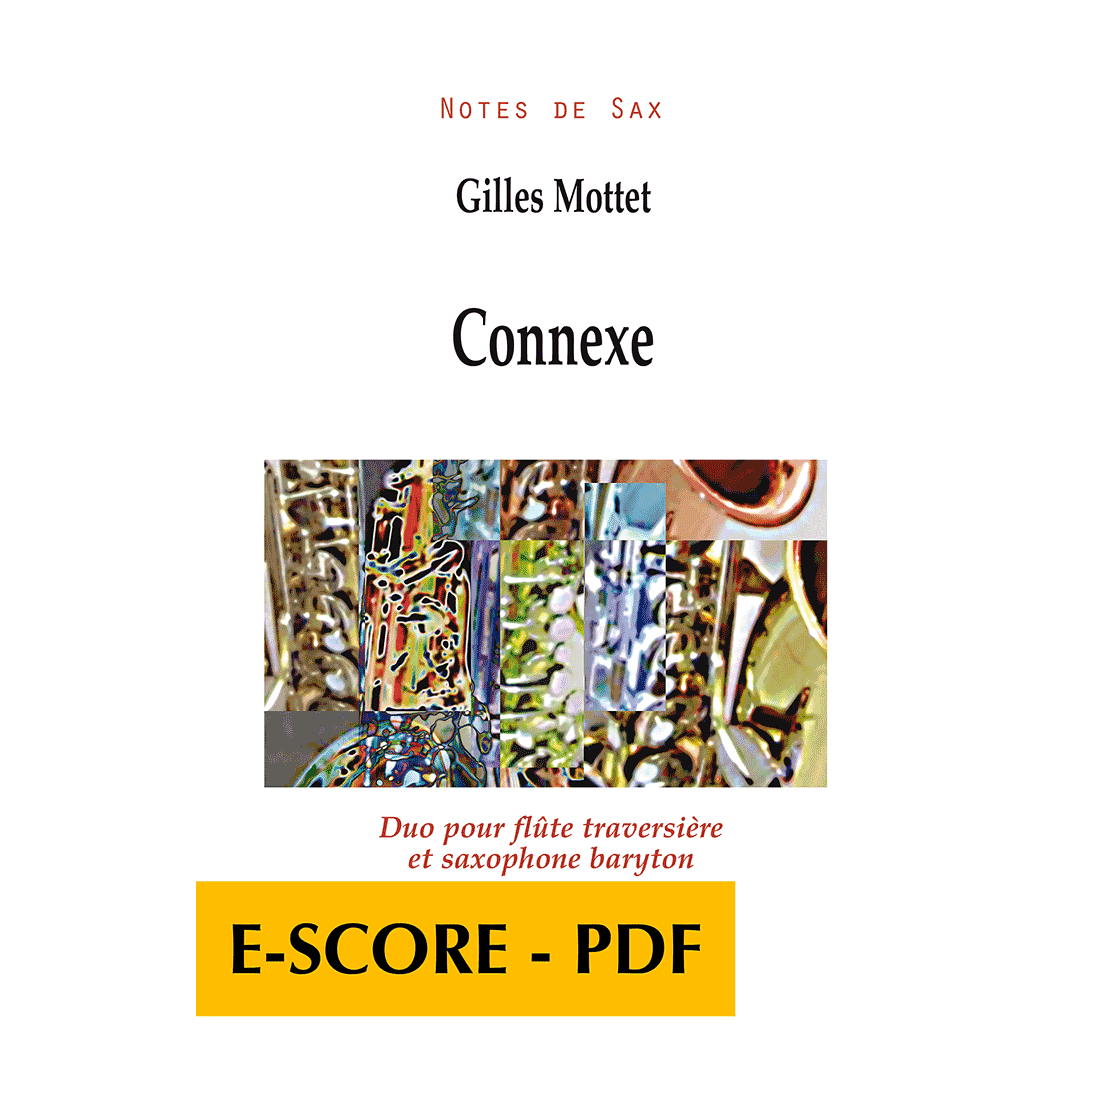 Connexe für Flöte und Baritonsaxophon - E-score PDF